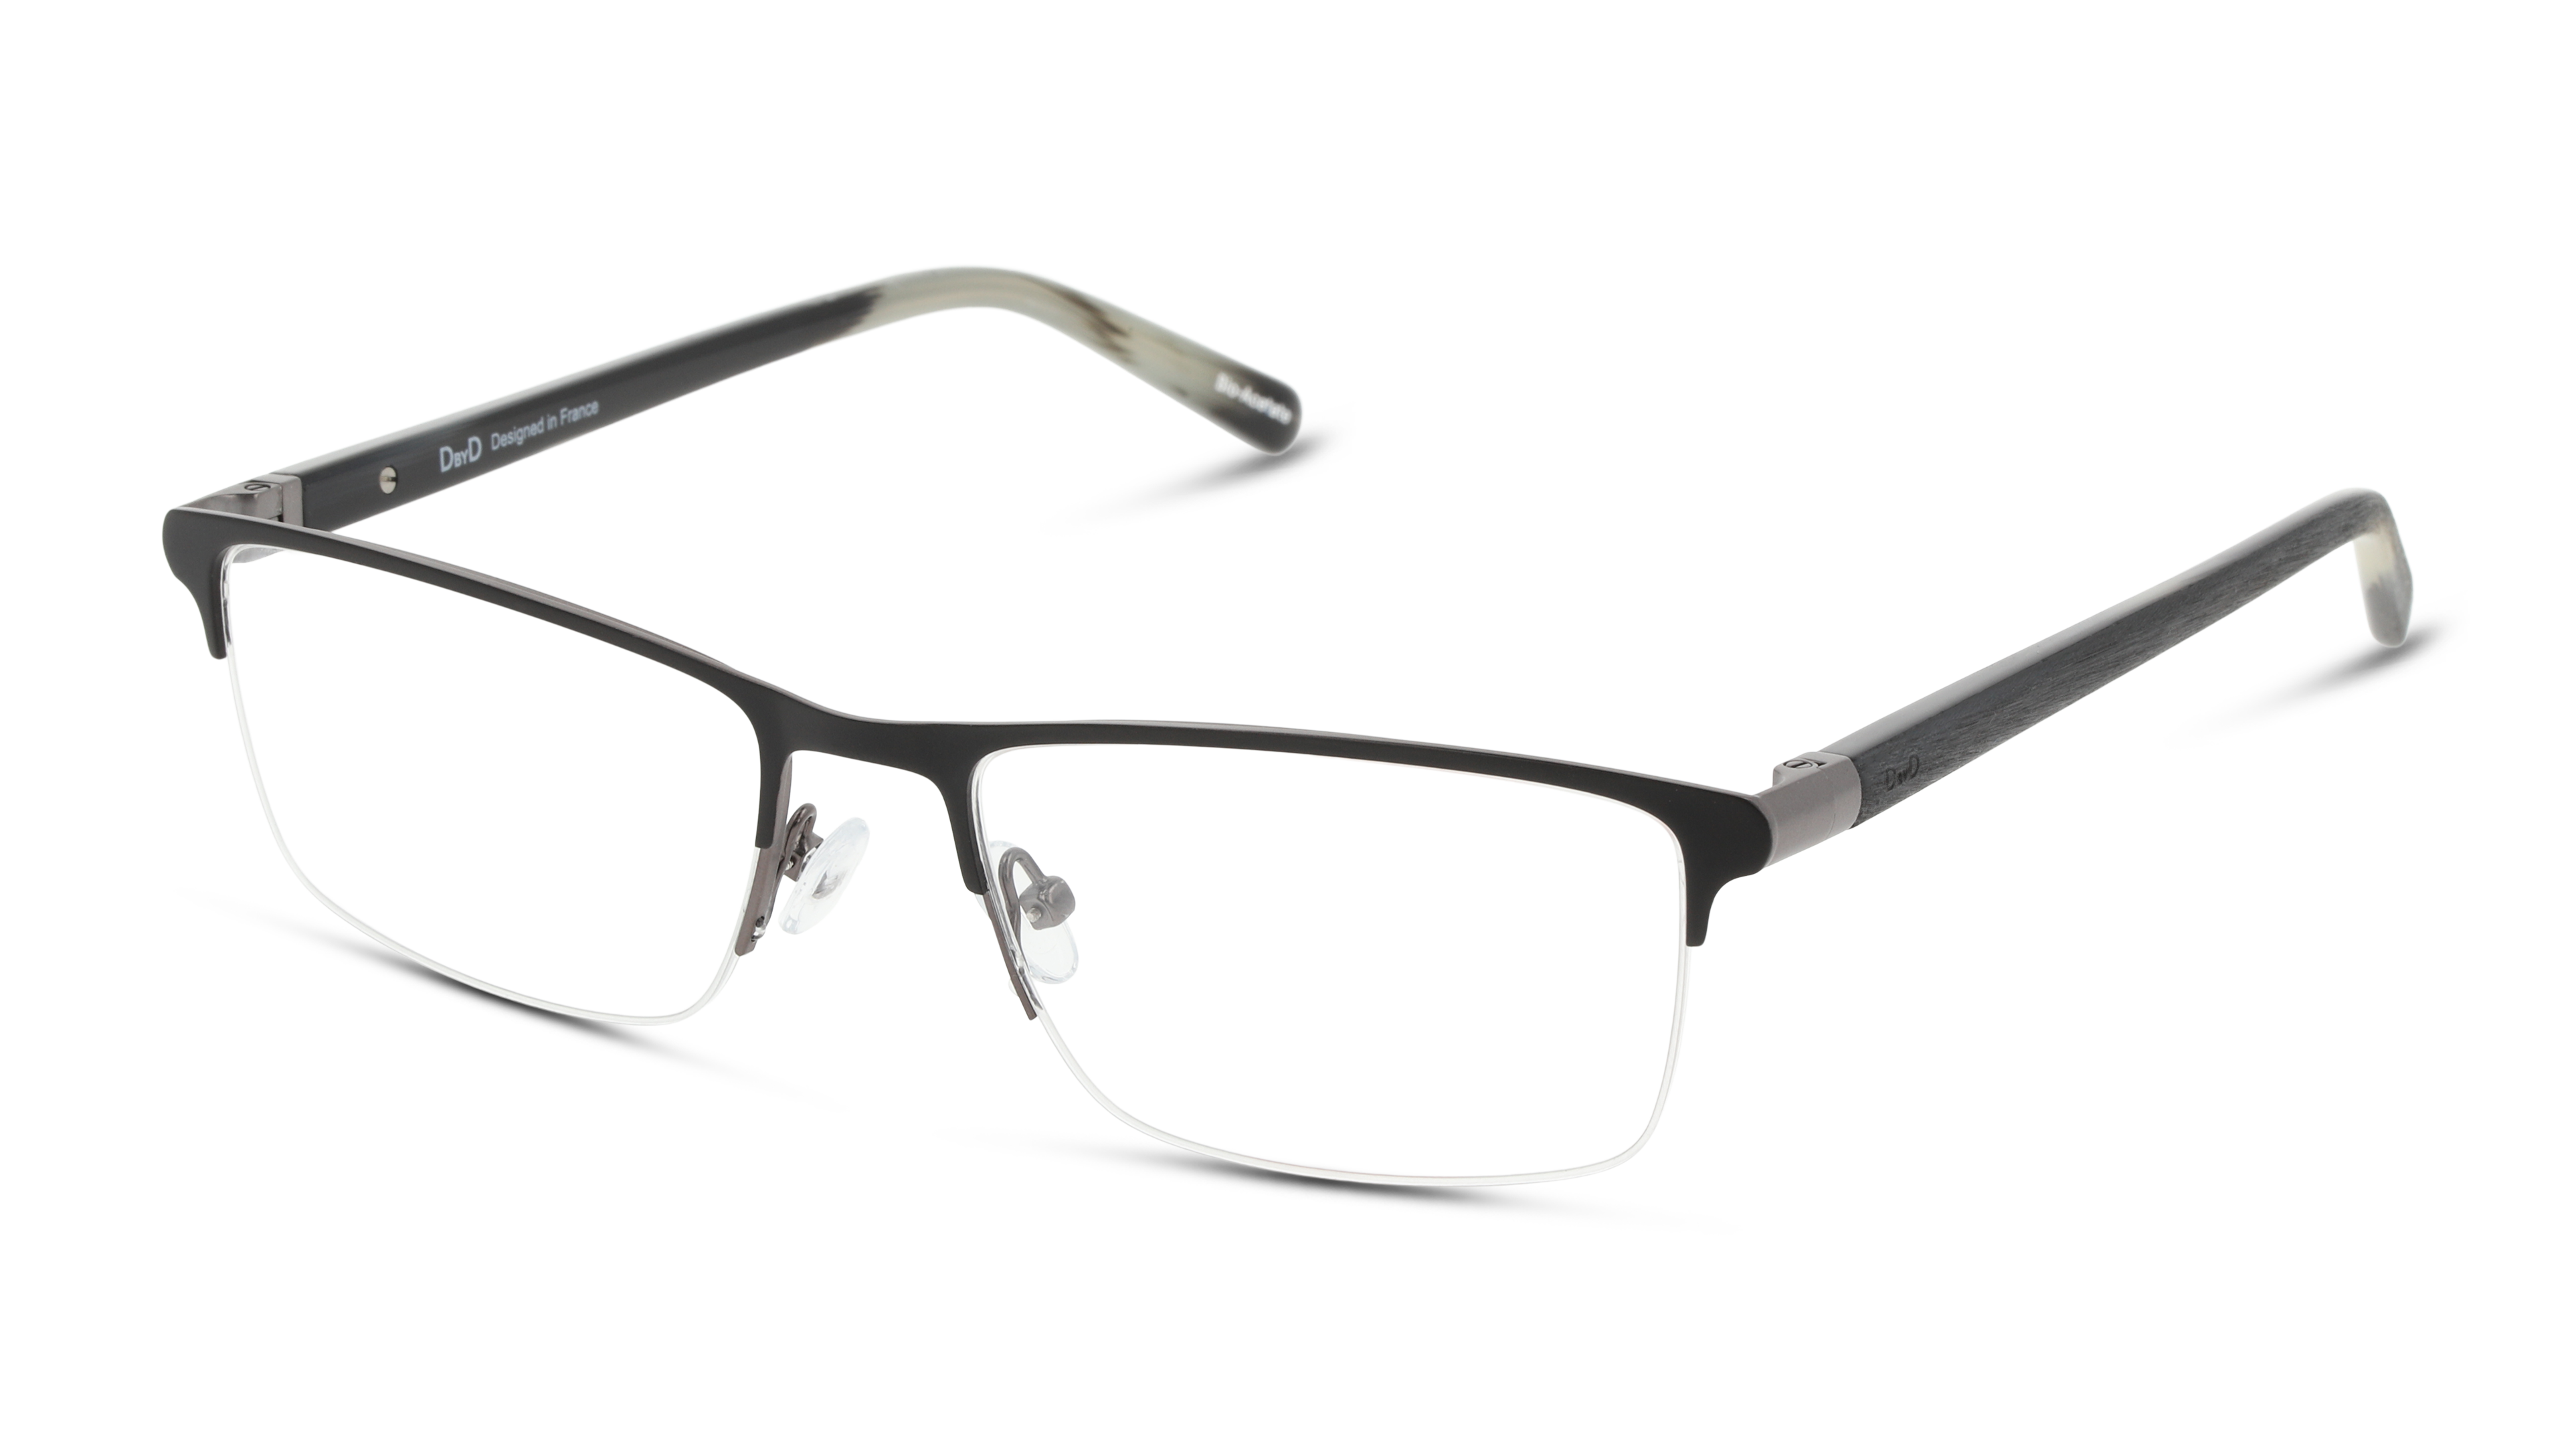 Angle_Left01 DBYD DBOM5077 (BG00) Glasses Transparent / Black